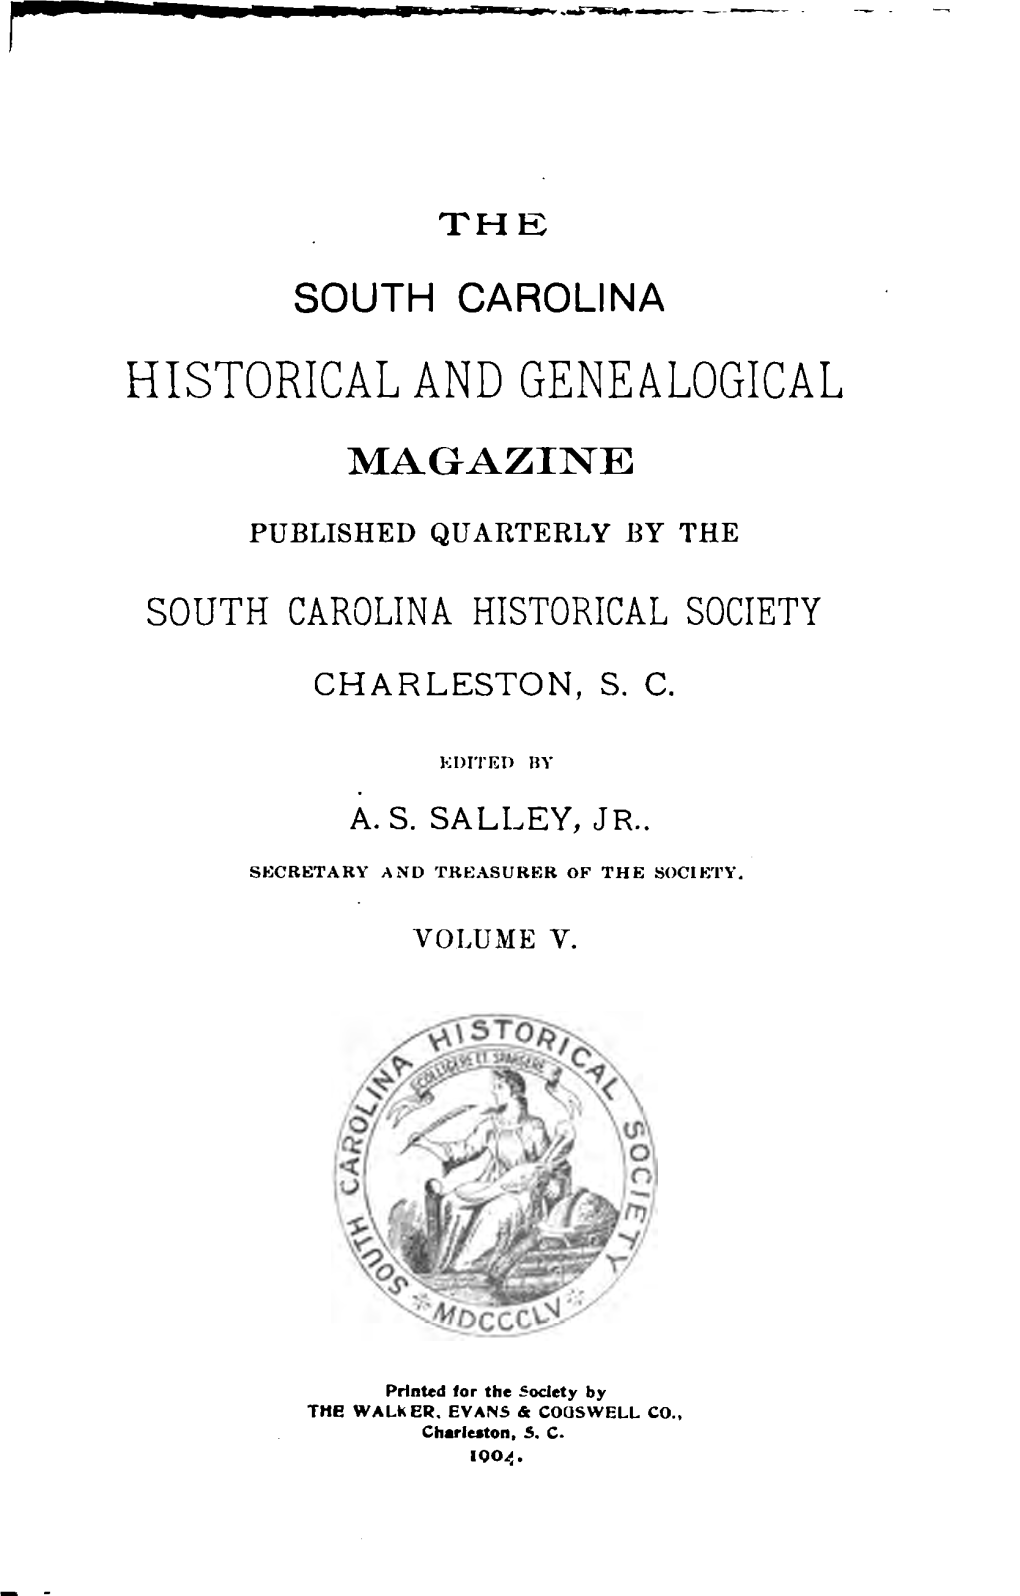 The South Carolina Historical and Genealogical Magazine, Vol